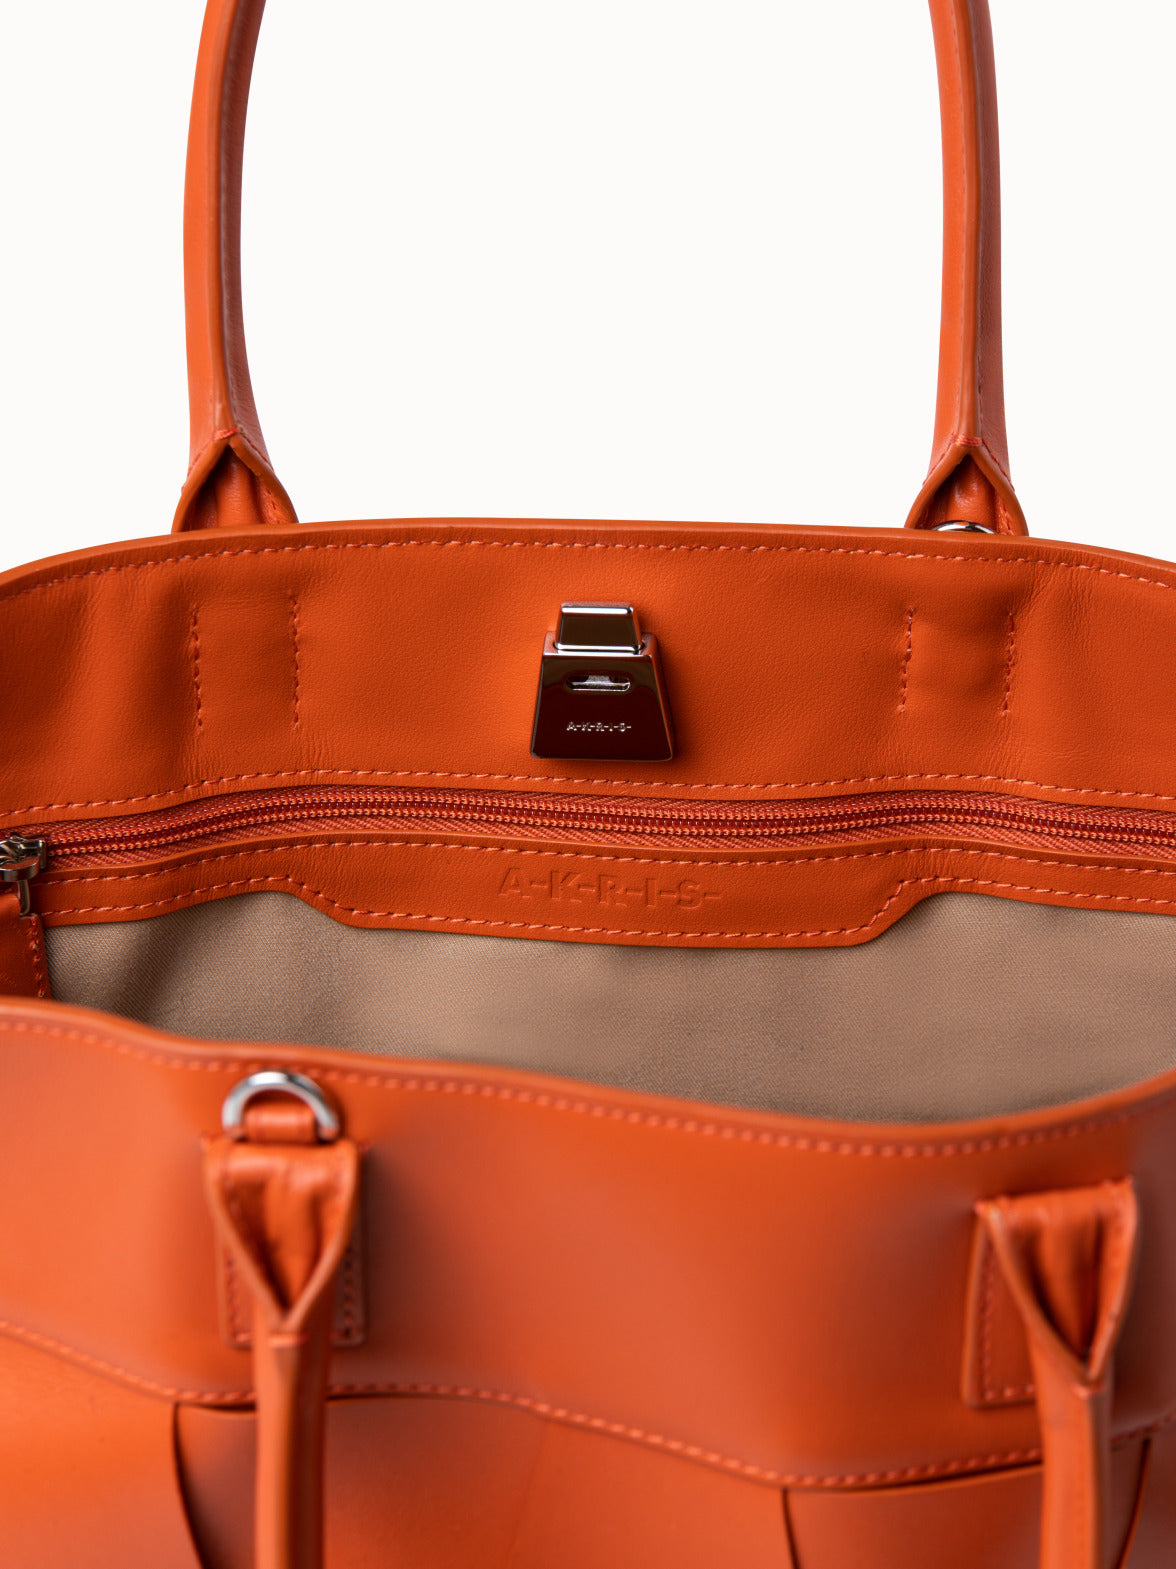 Orange Beaded Crossbody Handbag with 